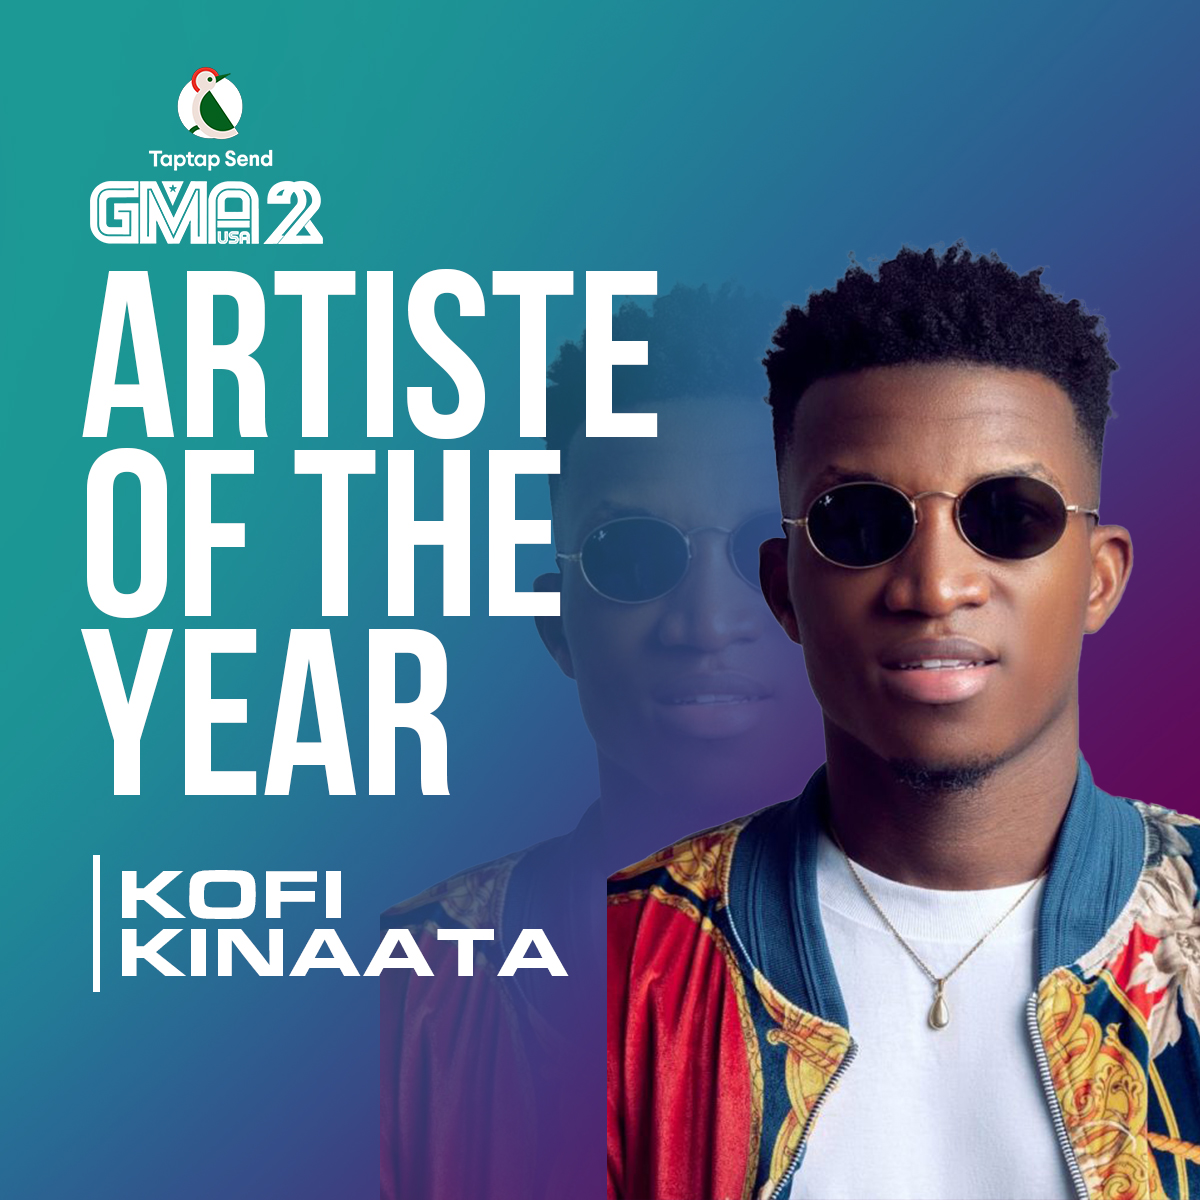 2022 GMA USA: Kofi Kinaata crowned Artiste of the Year; see full list of winners